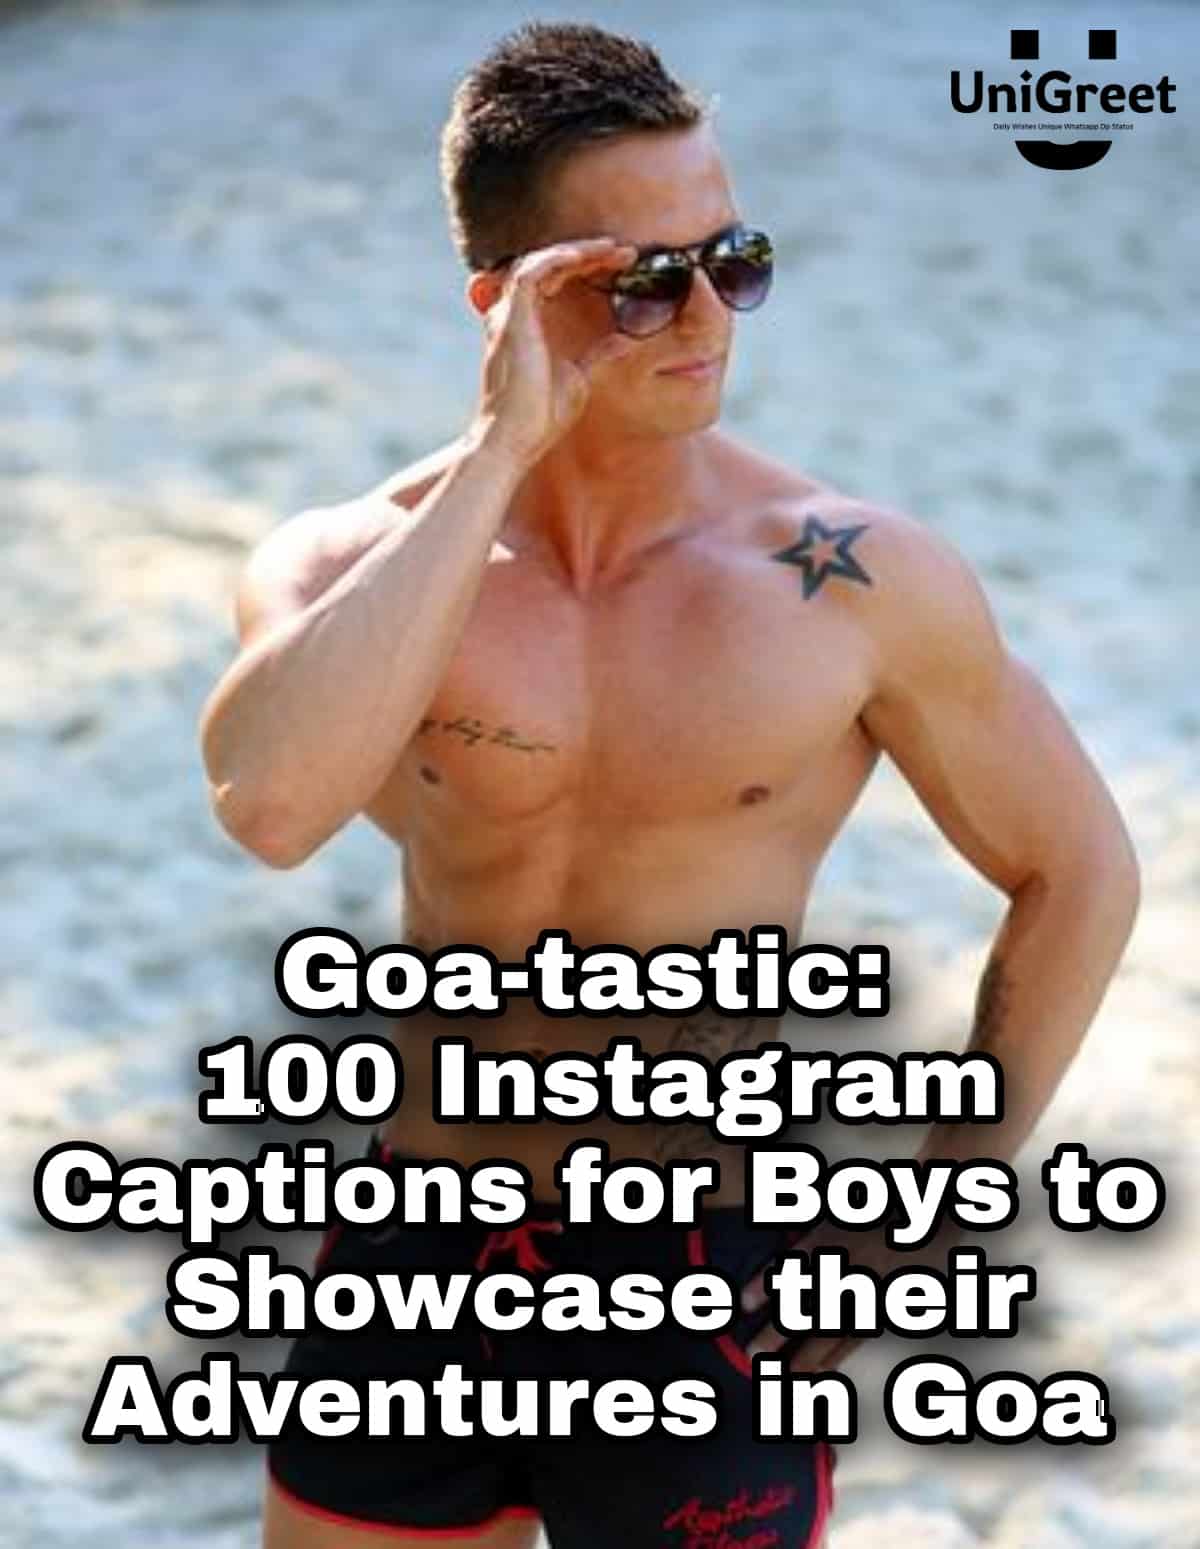 Goa-tastic: 100 Instagram Captions for Boys to Showcase their